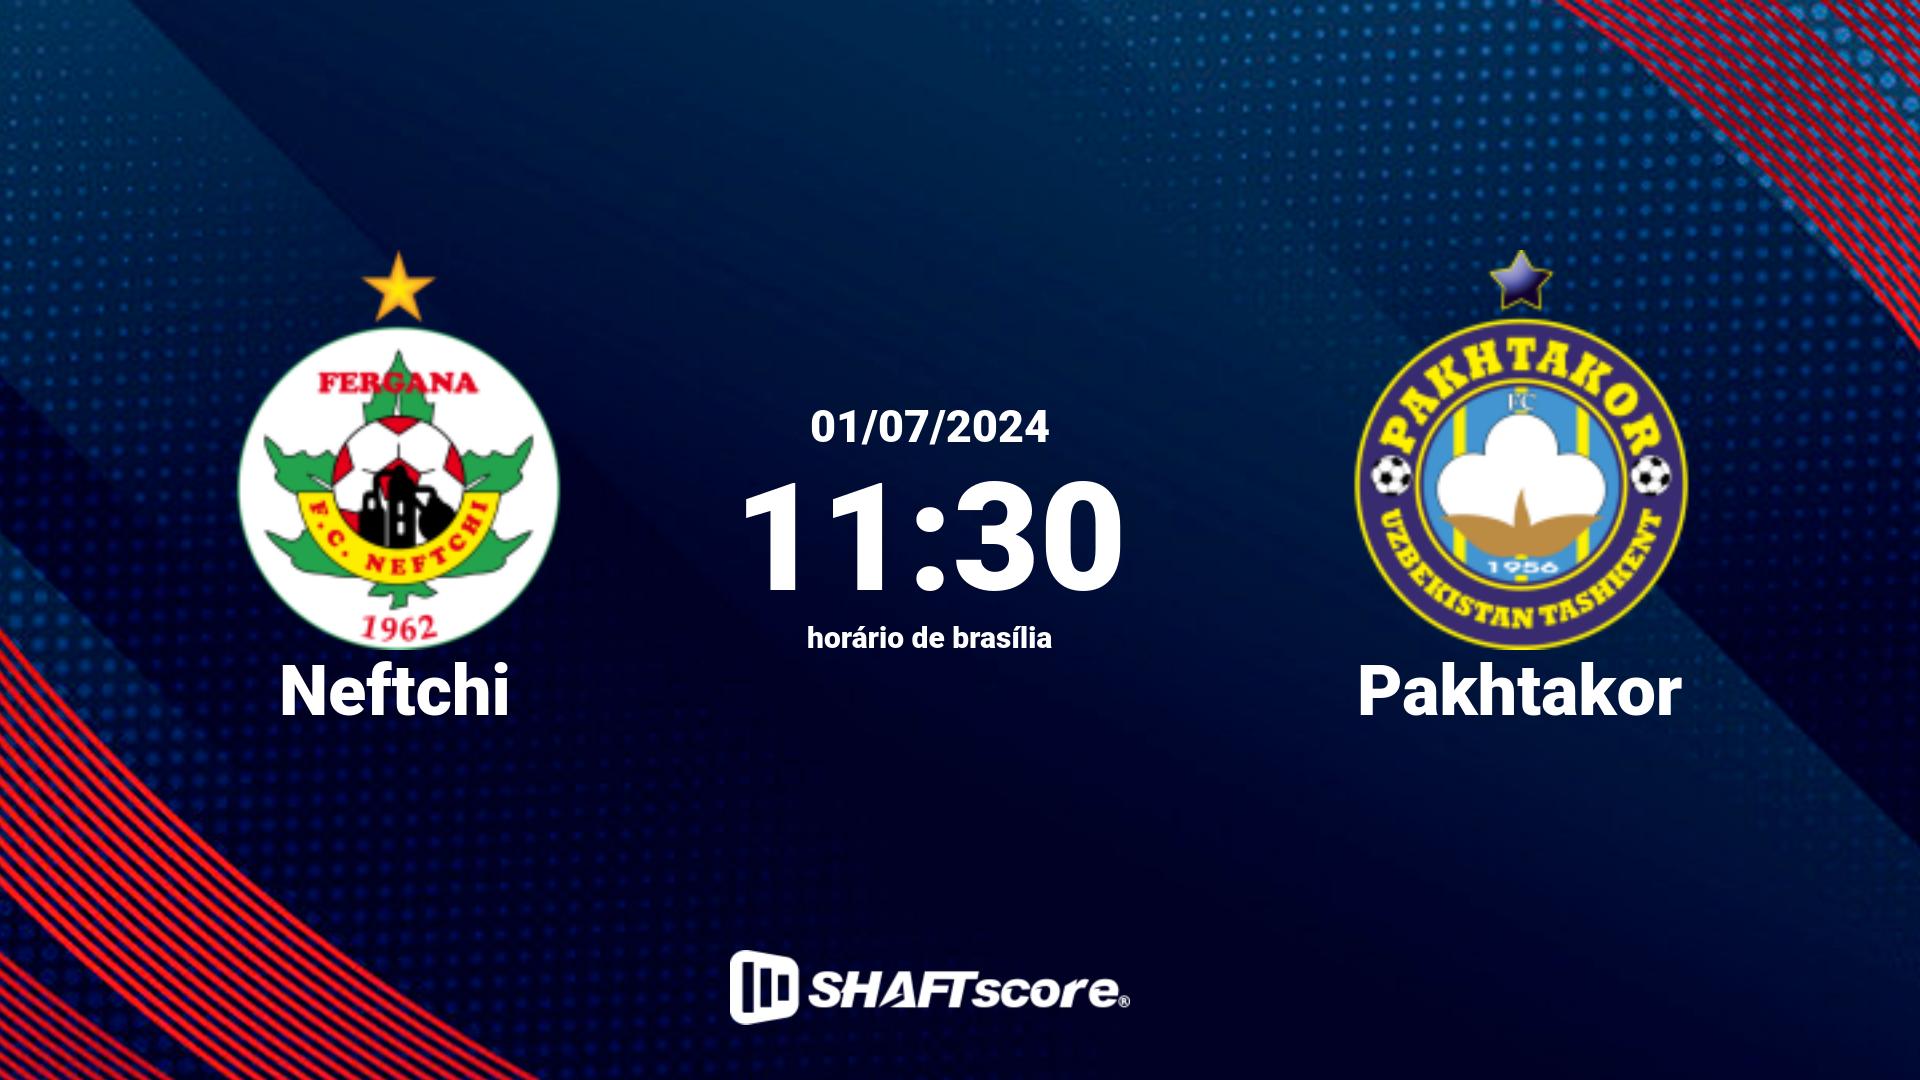 Estatísticas do jogo Neftchi vs Pakhtakor 01.07 11:30